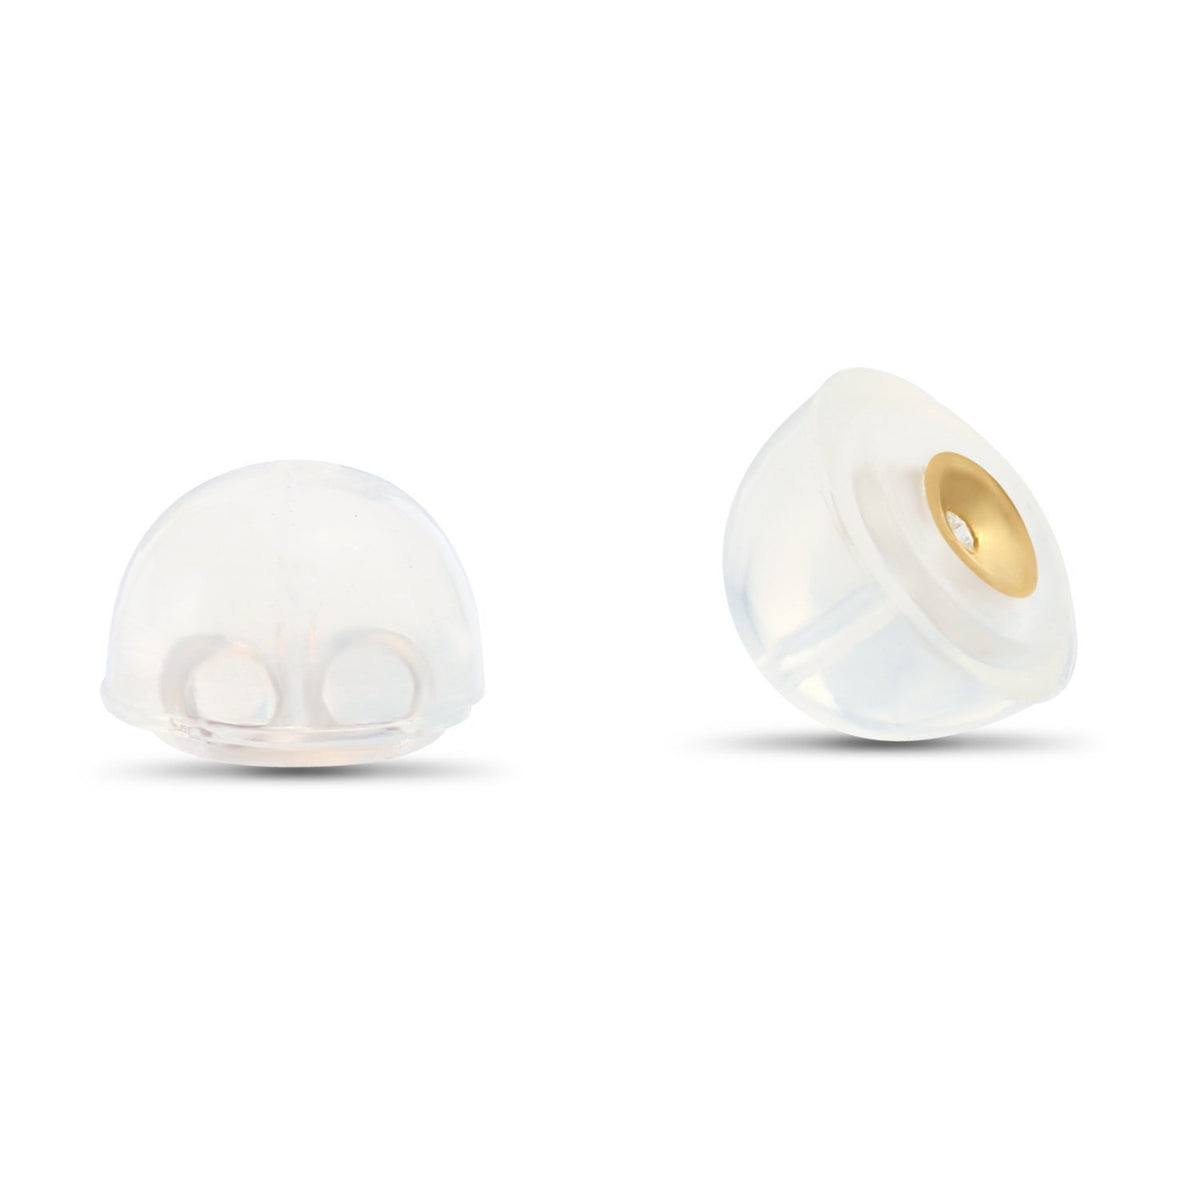 20pcs Secure Earring Backs for Heavy Earrings Stoppers Plastic Discs KC Gold